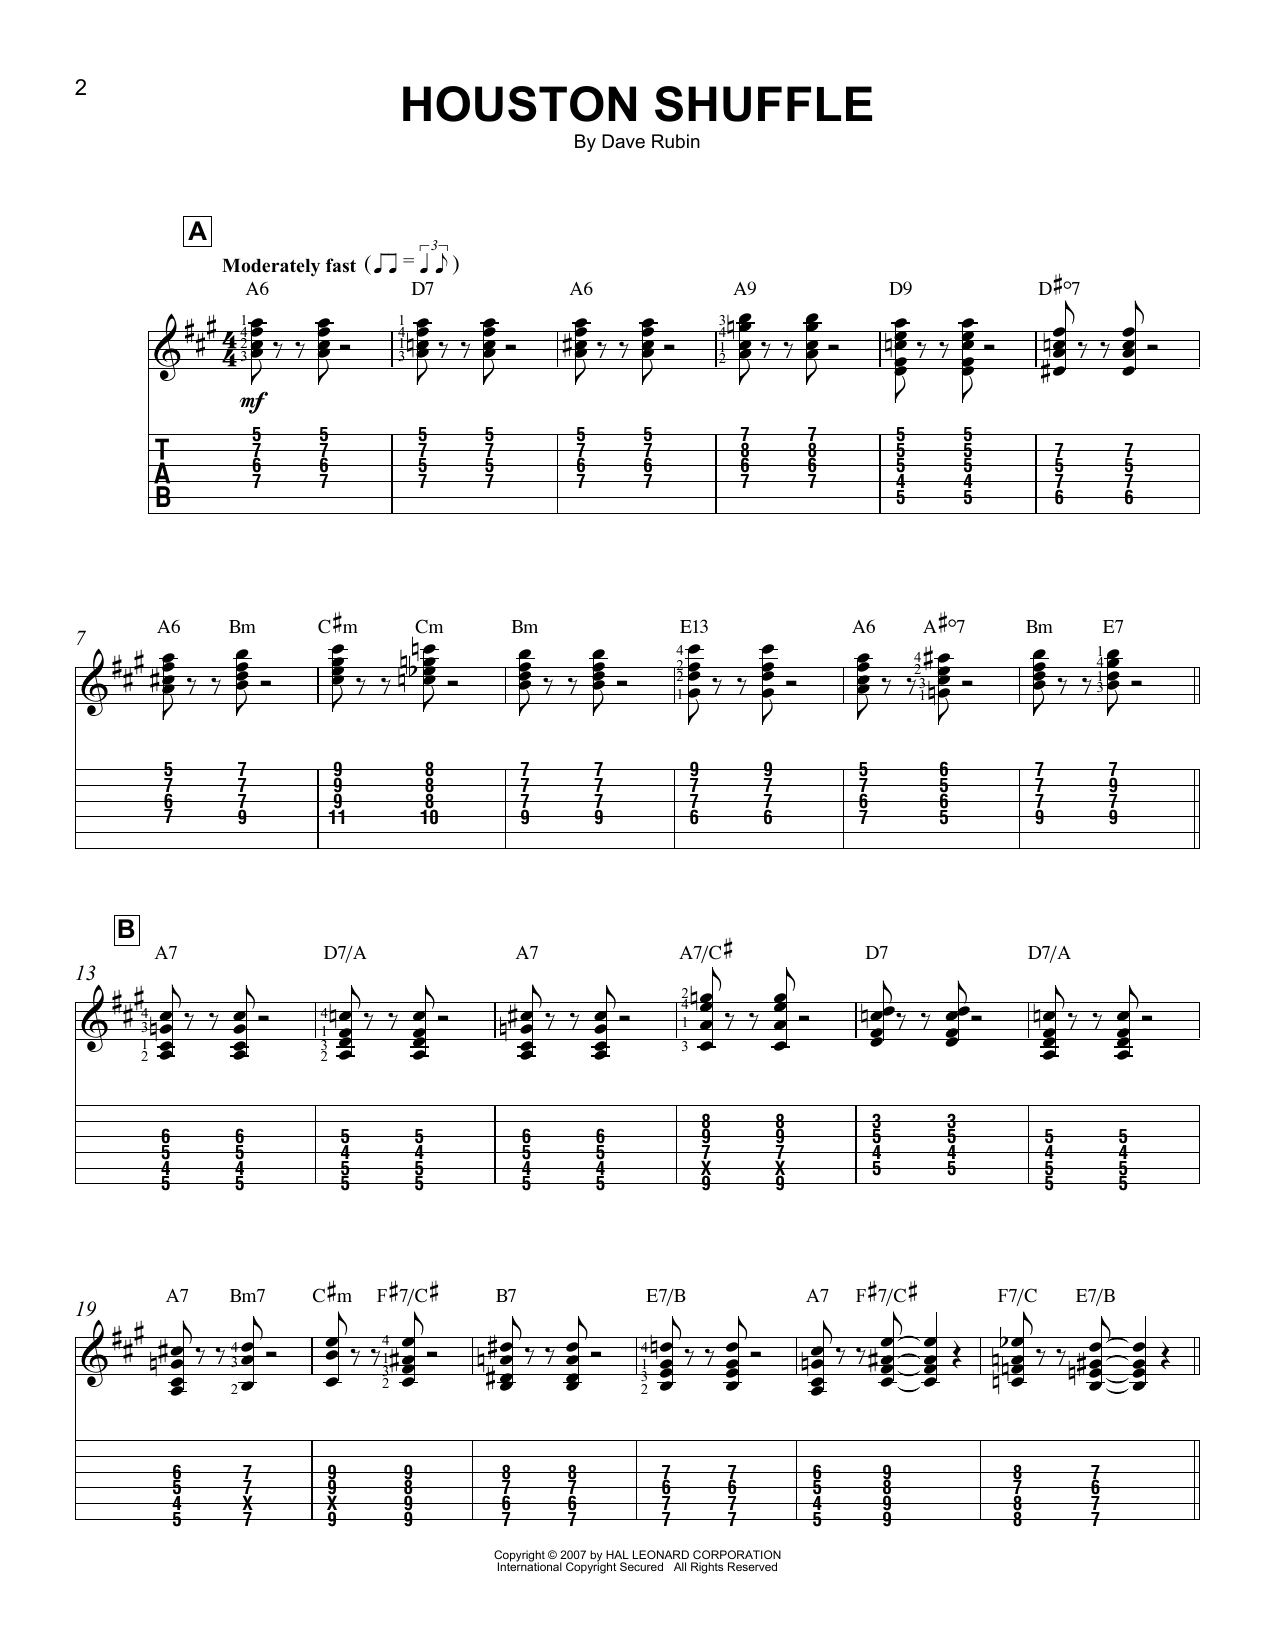 Dave Rubin Houston Shuffle Sheet Music Notes & Chords for Easy Guitar Tab - Download or Print PDF